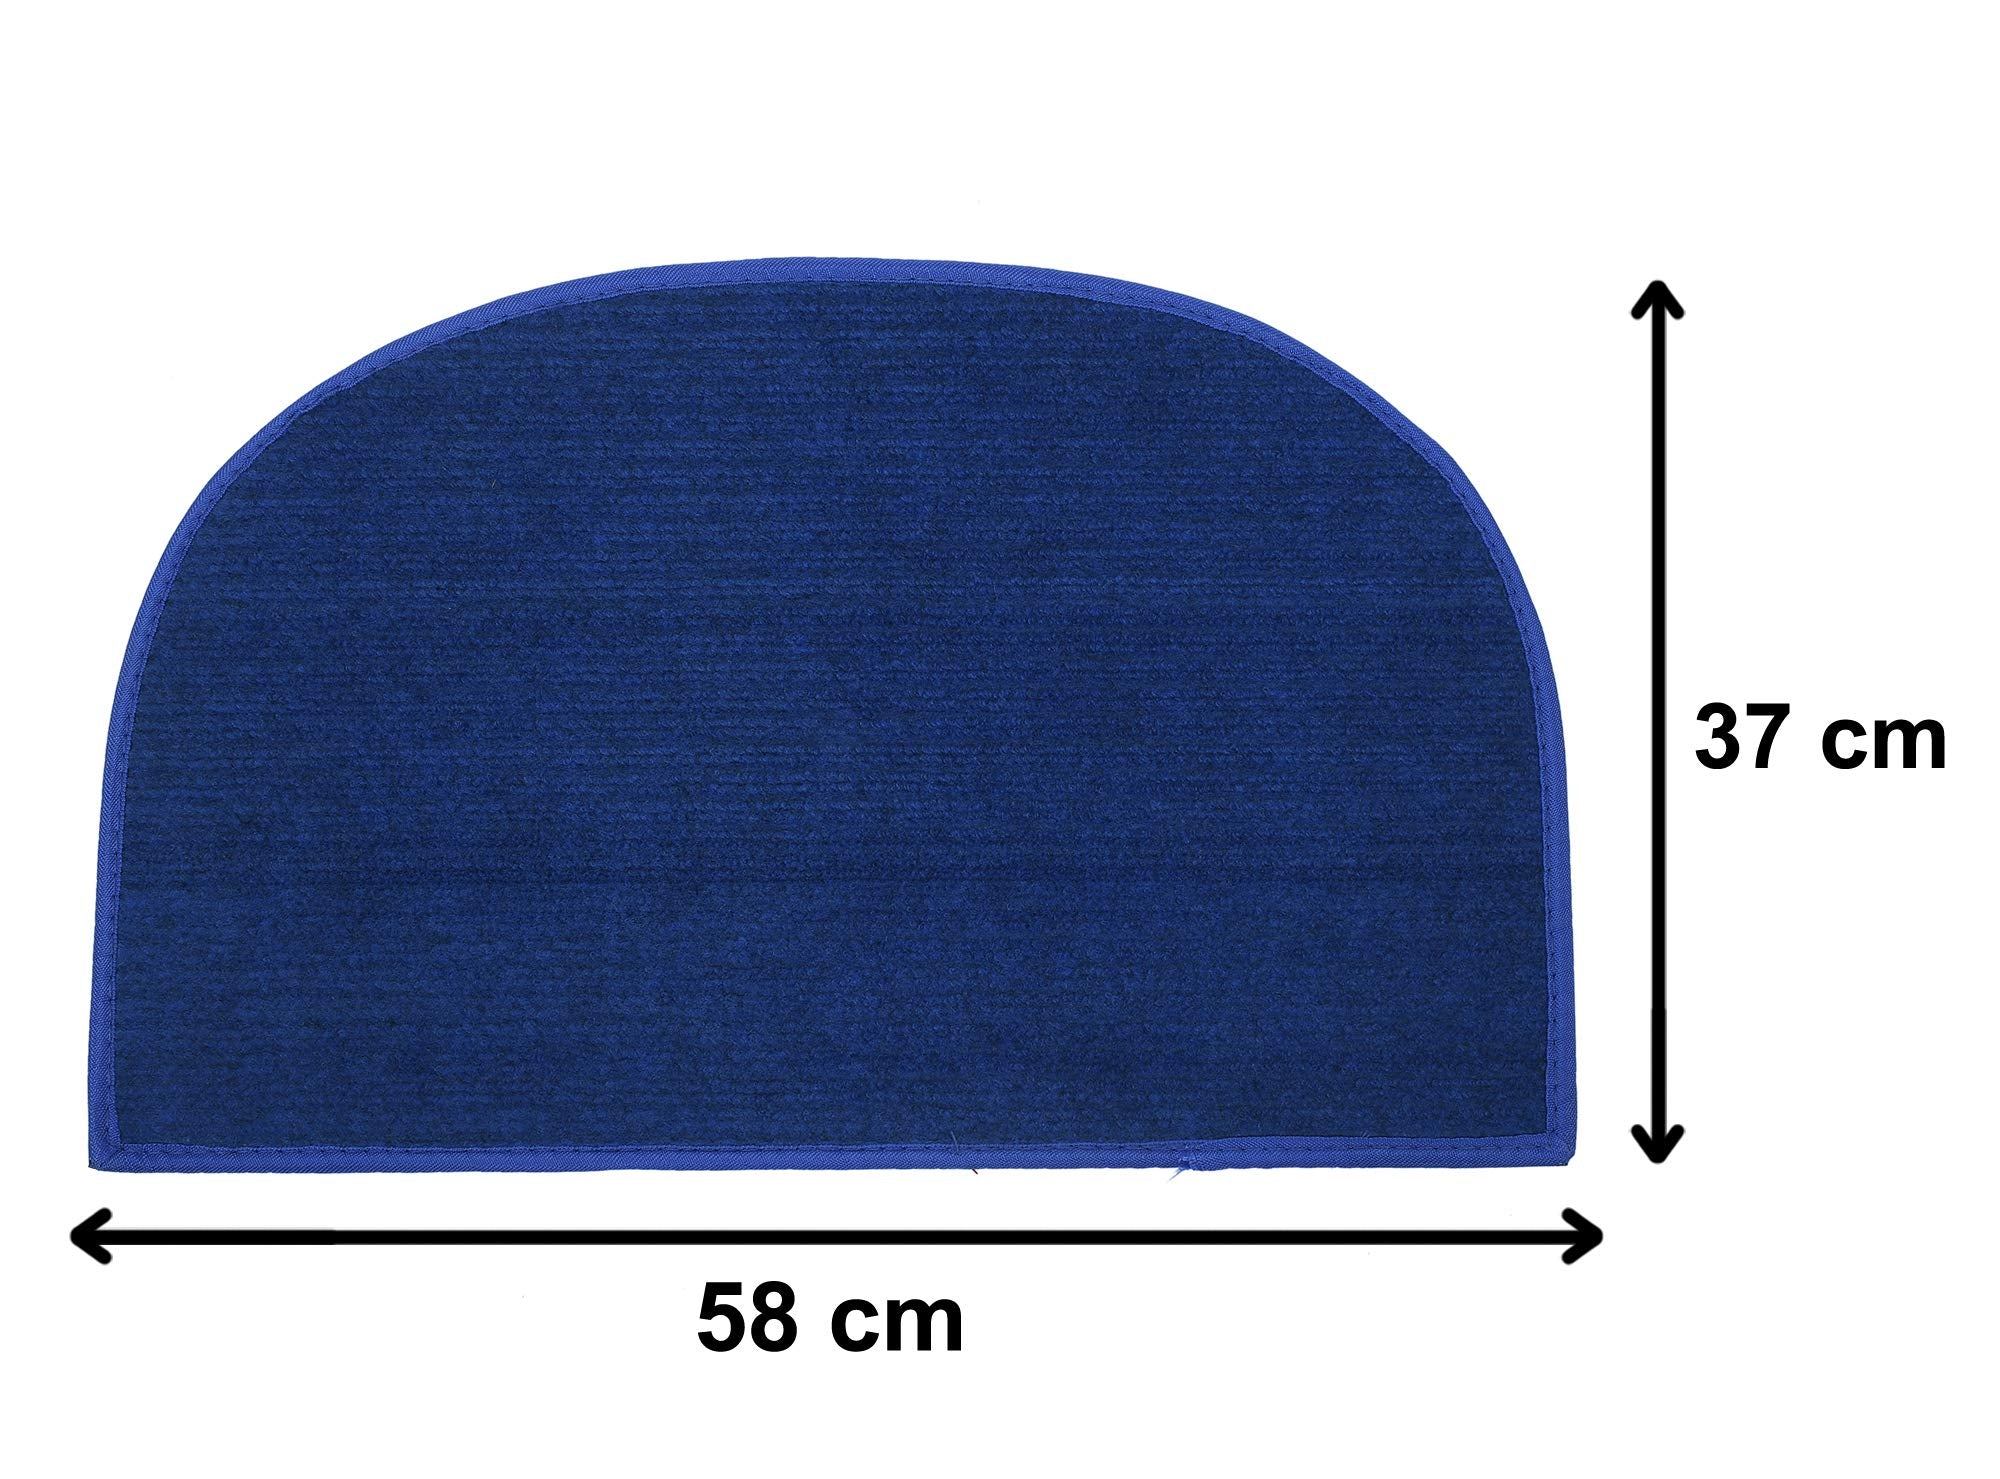 Heart Home D-Shape Durable Microfiber Door Mat, Heavy Duty Doormat,(14'' x 23'', Blue)-HEART12171, Standard